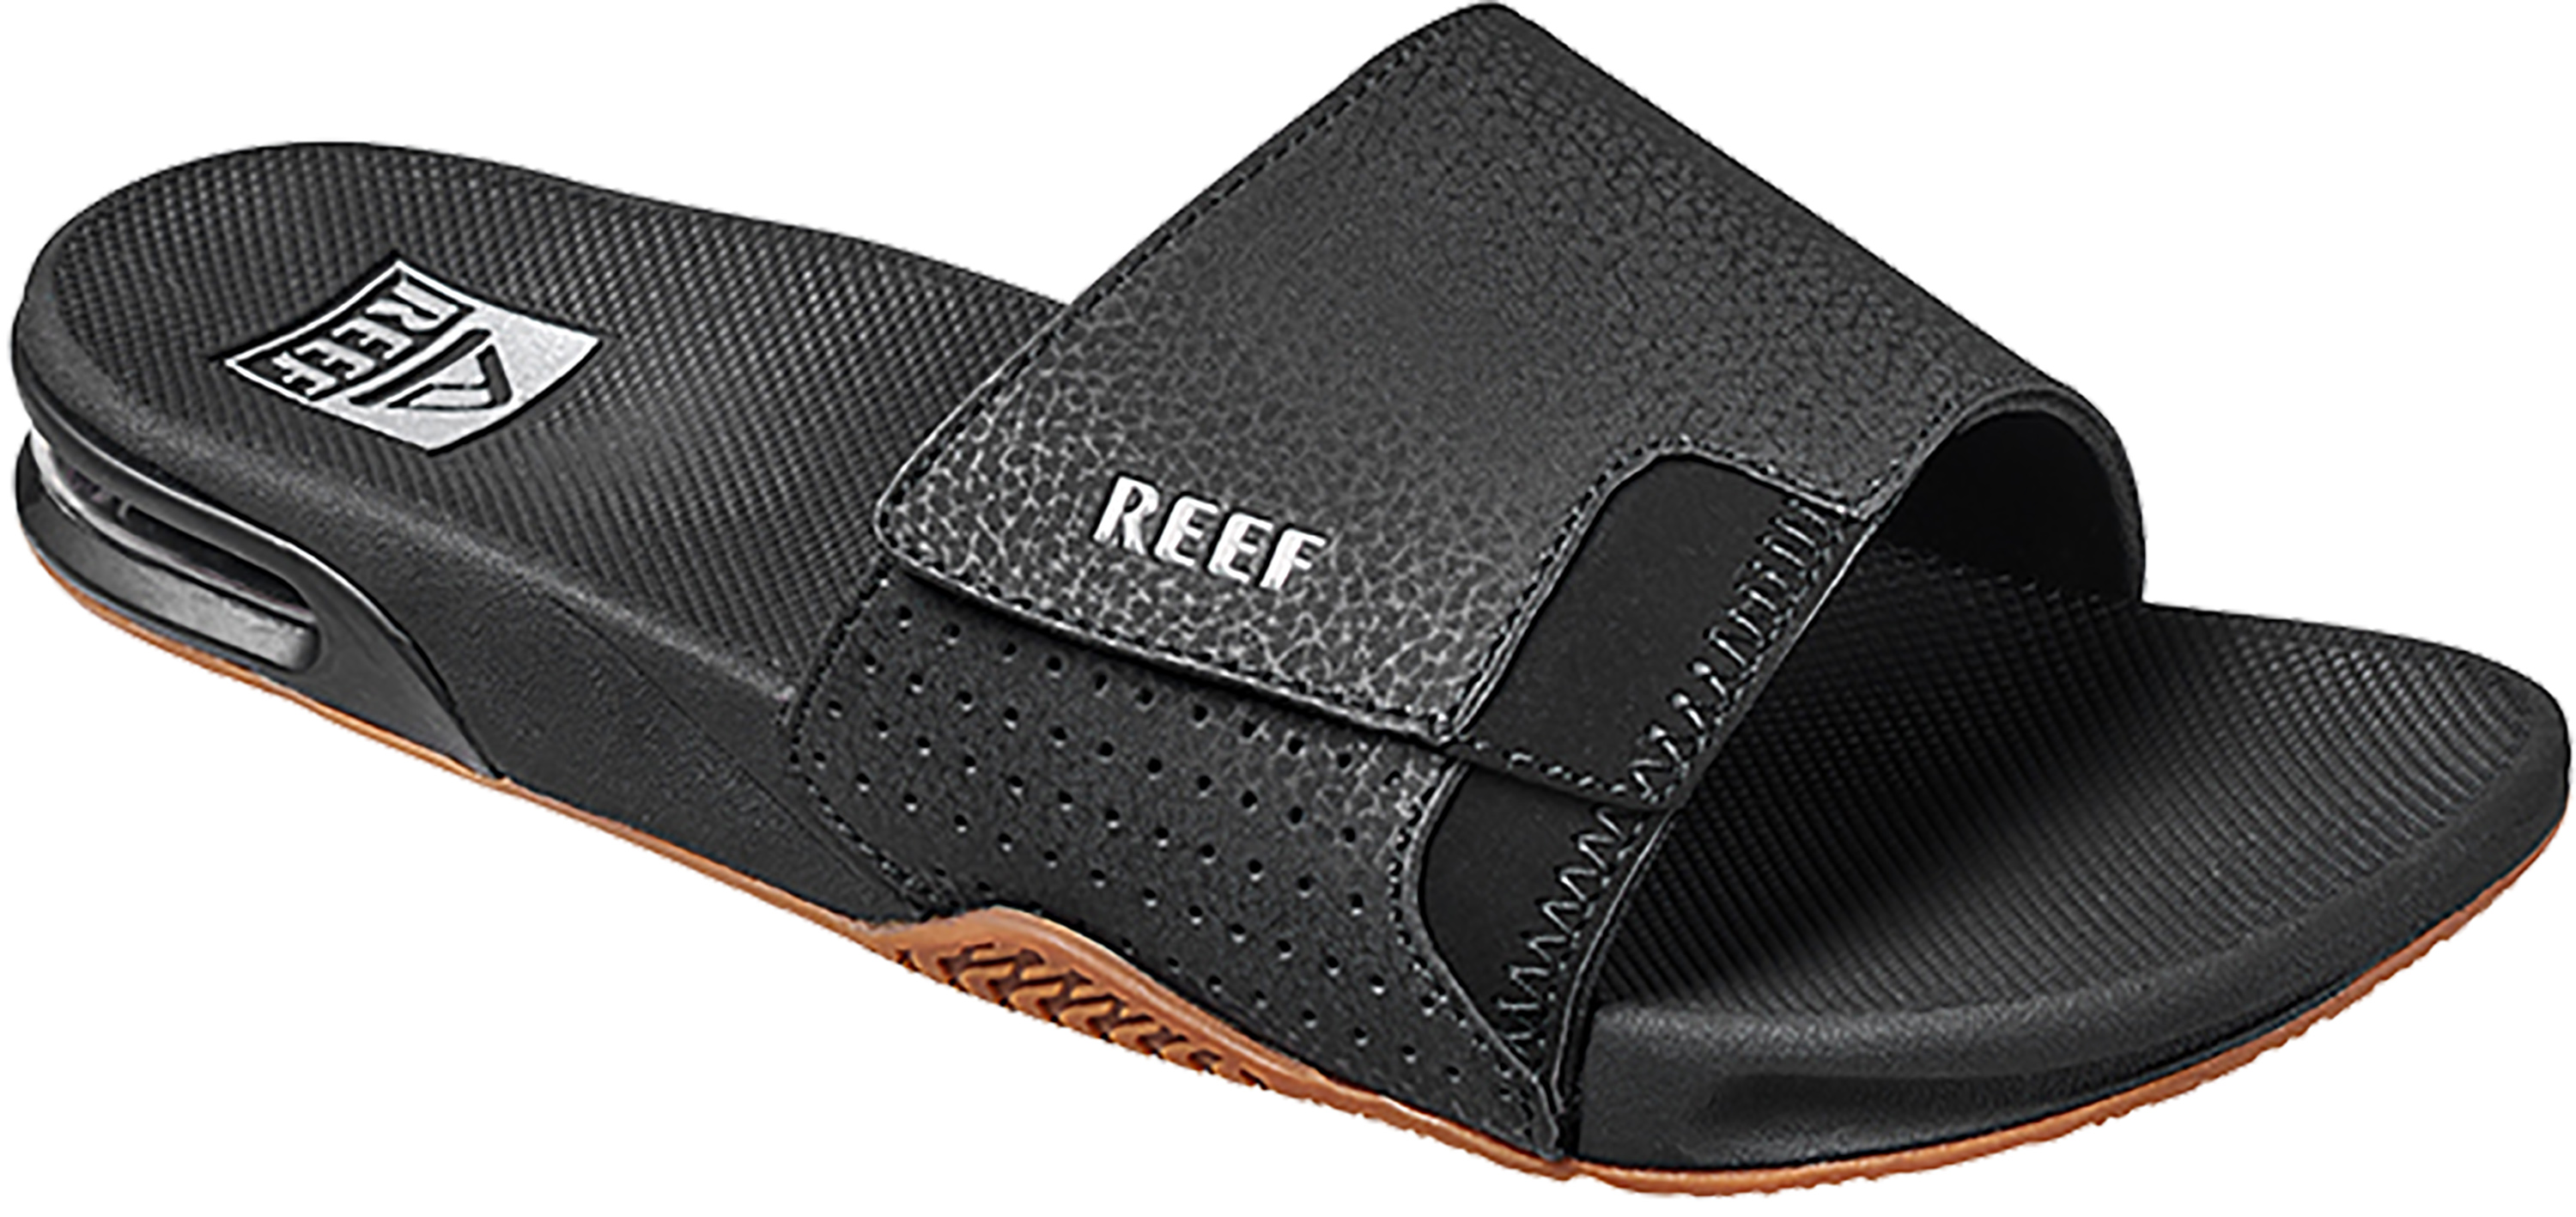 Reef Black/Silver Fanning Slide size 10